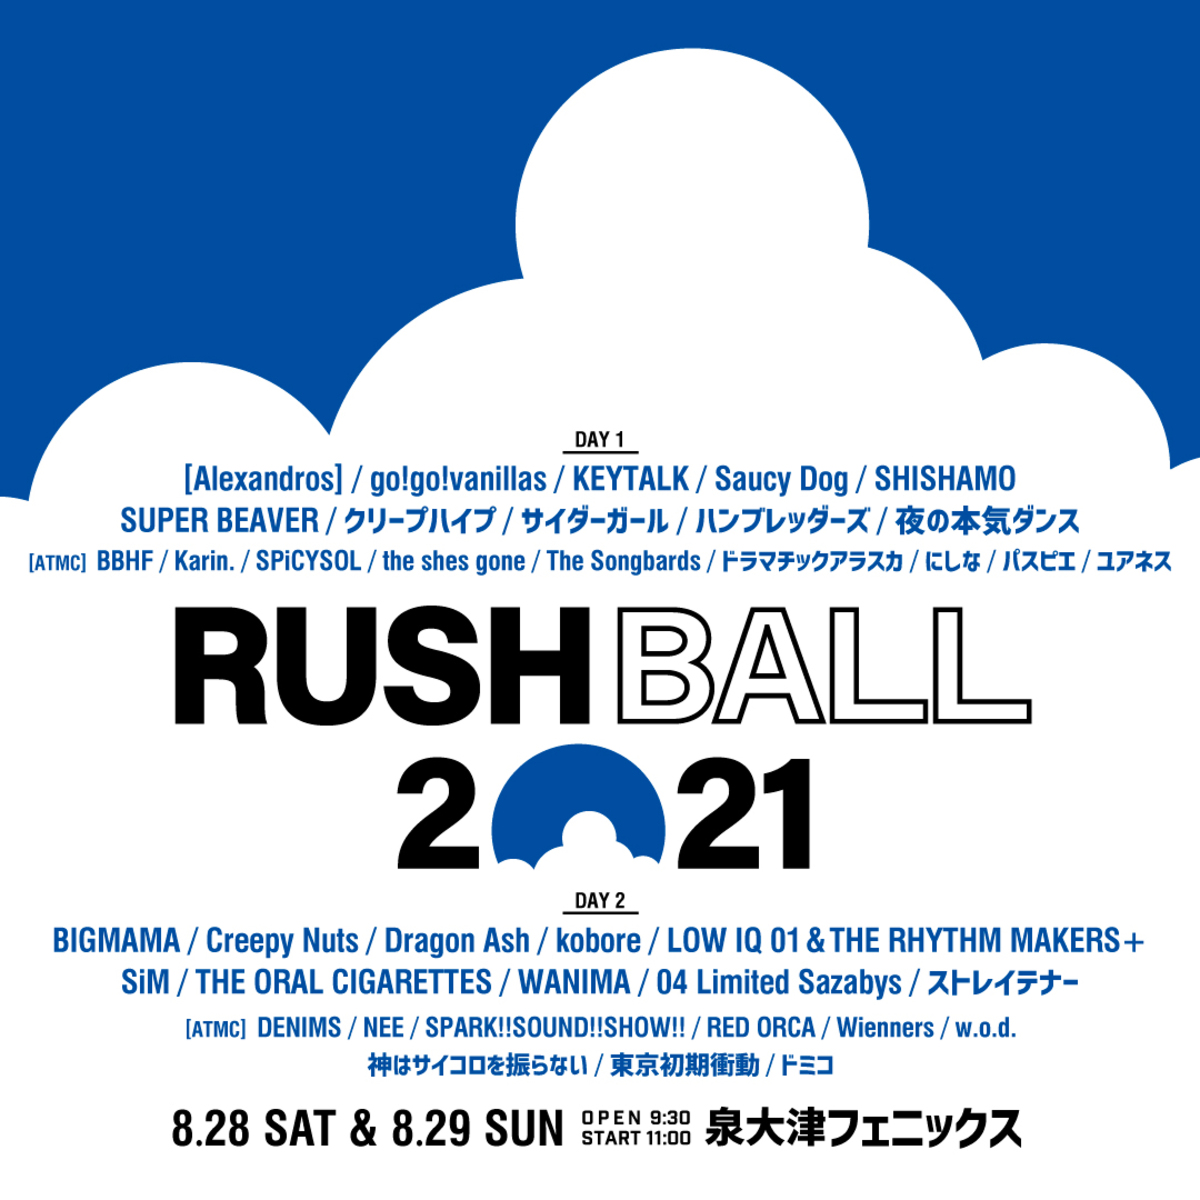 Rush Ball 21 8 28 29開催決定 ドロス Keytalk Shishamo オーラル Wanima テナー Creepy Nuts 神サイ スサシ ドミコら全38組のラインナップ発表